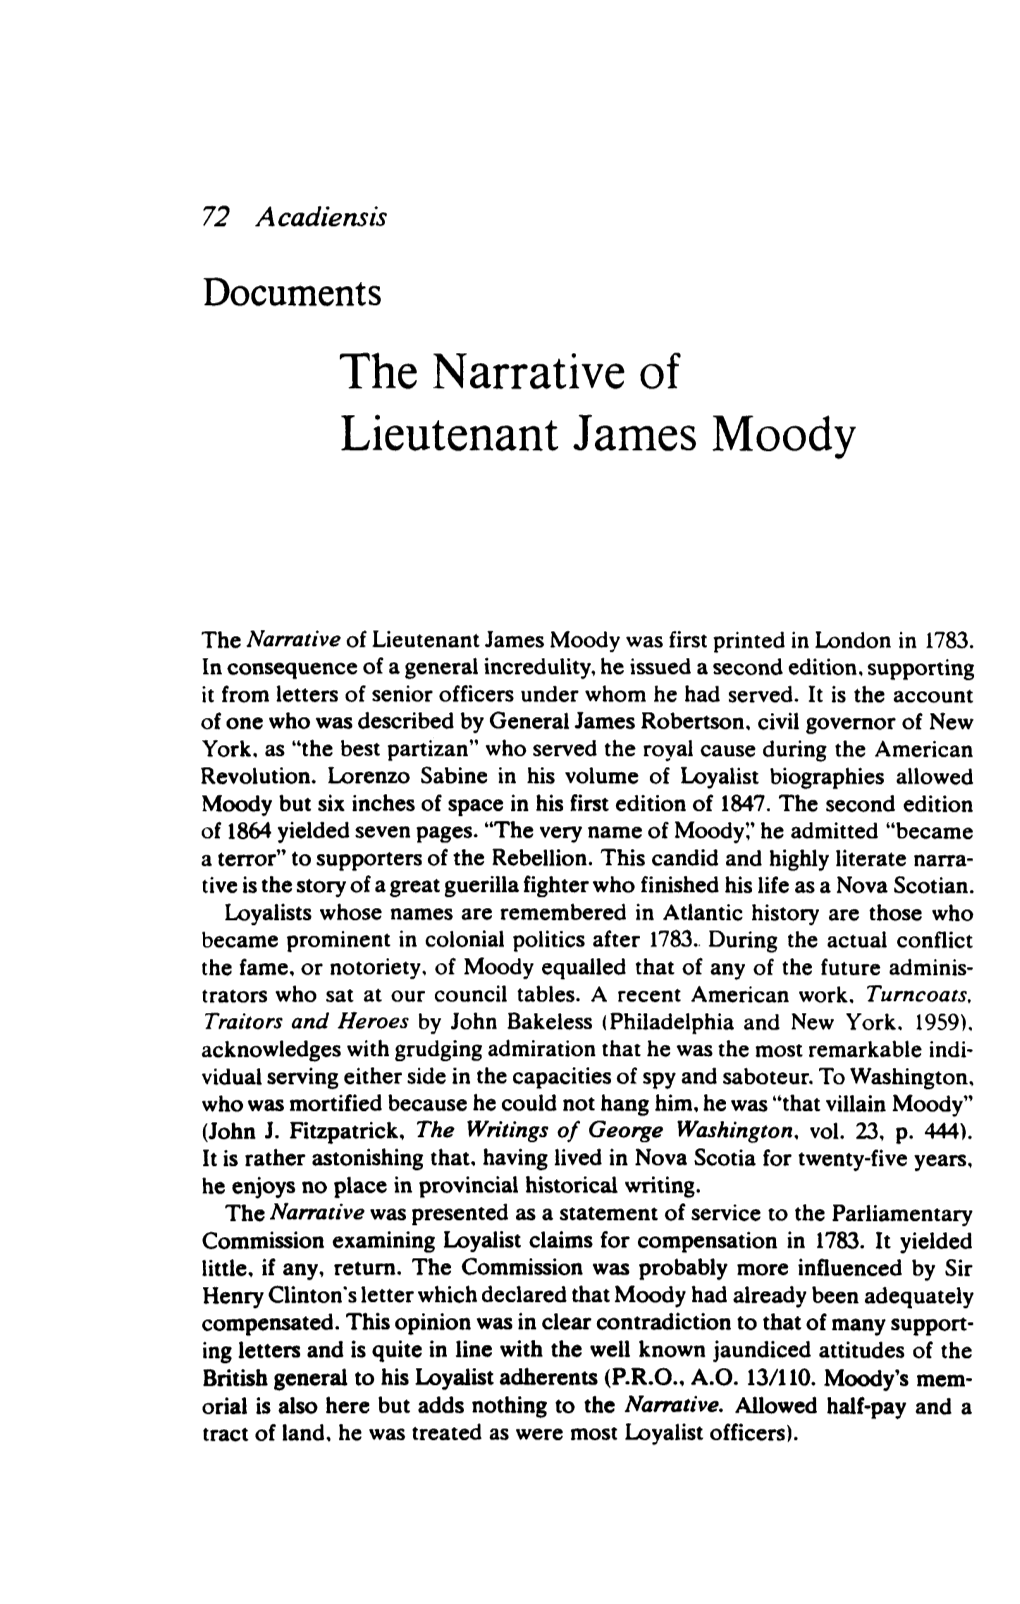 The Narrative of Lieutenant James Moody